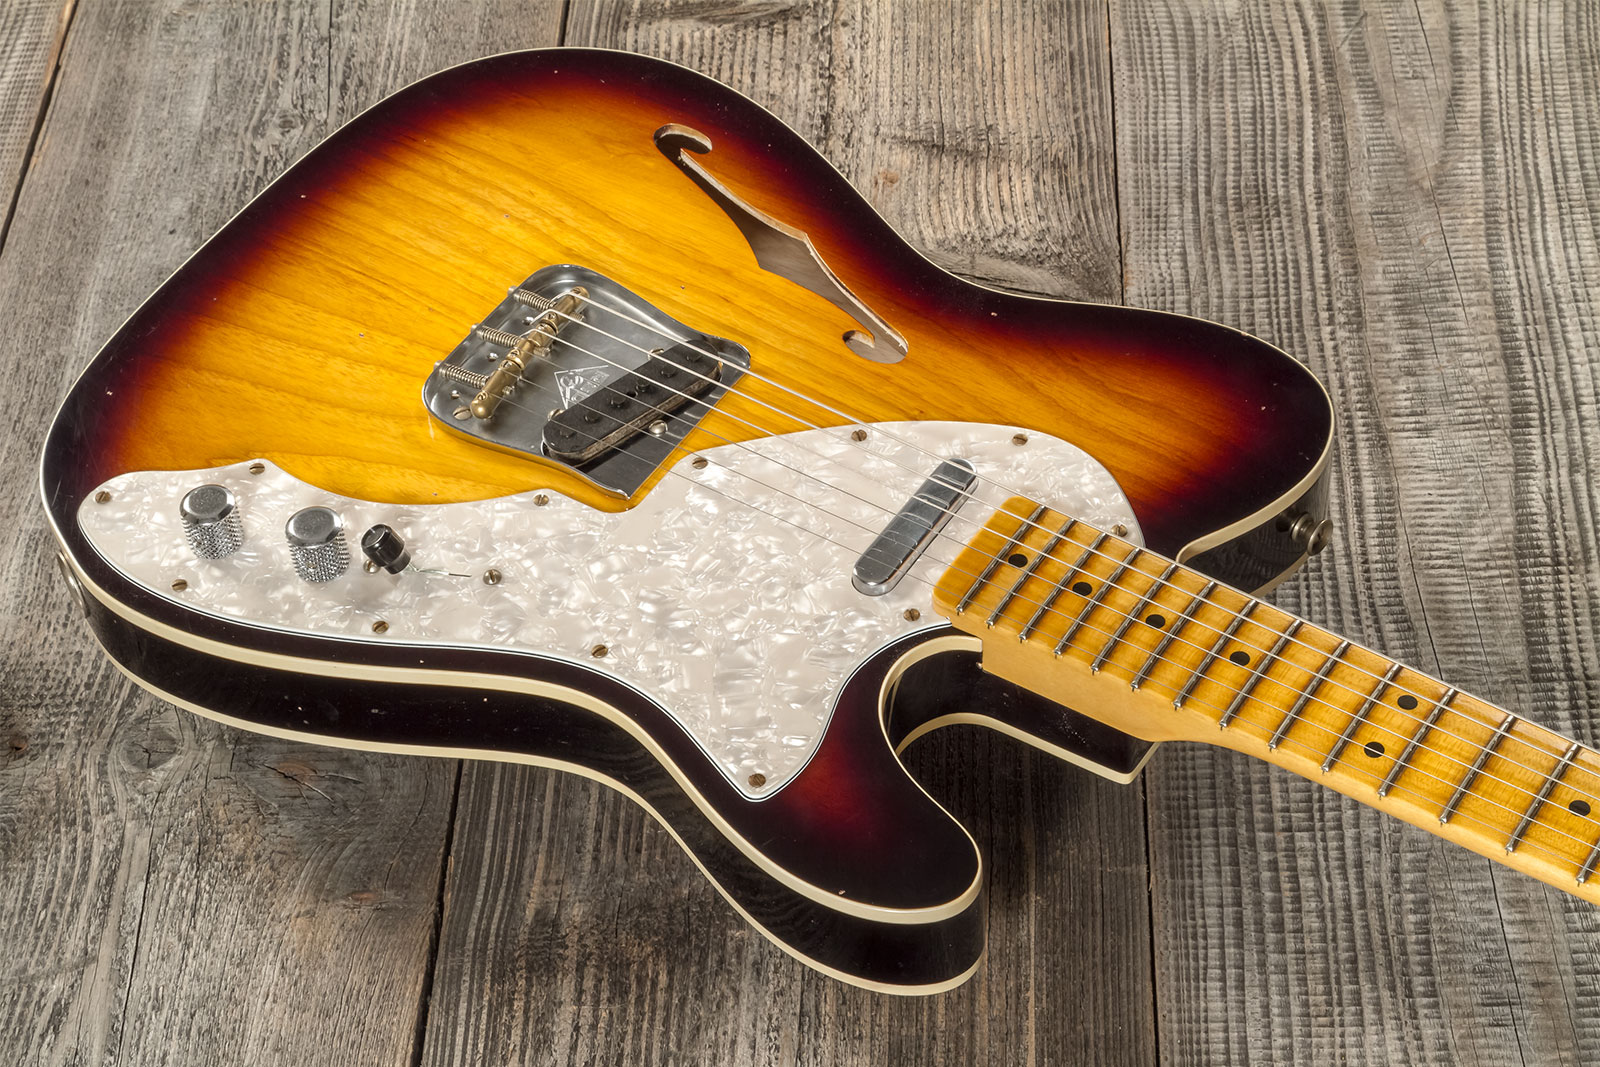 Fender Custom Shop Tele Thinline 50s Mn #cz574212 - Journeyman Relic Aged 2-color Sunburst - Tel shape electric guitar - Variation 3